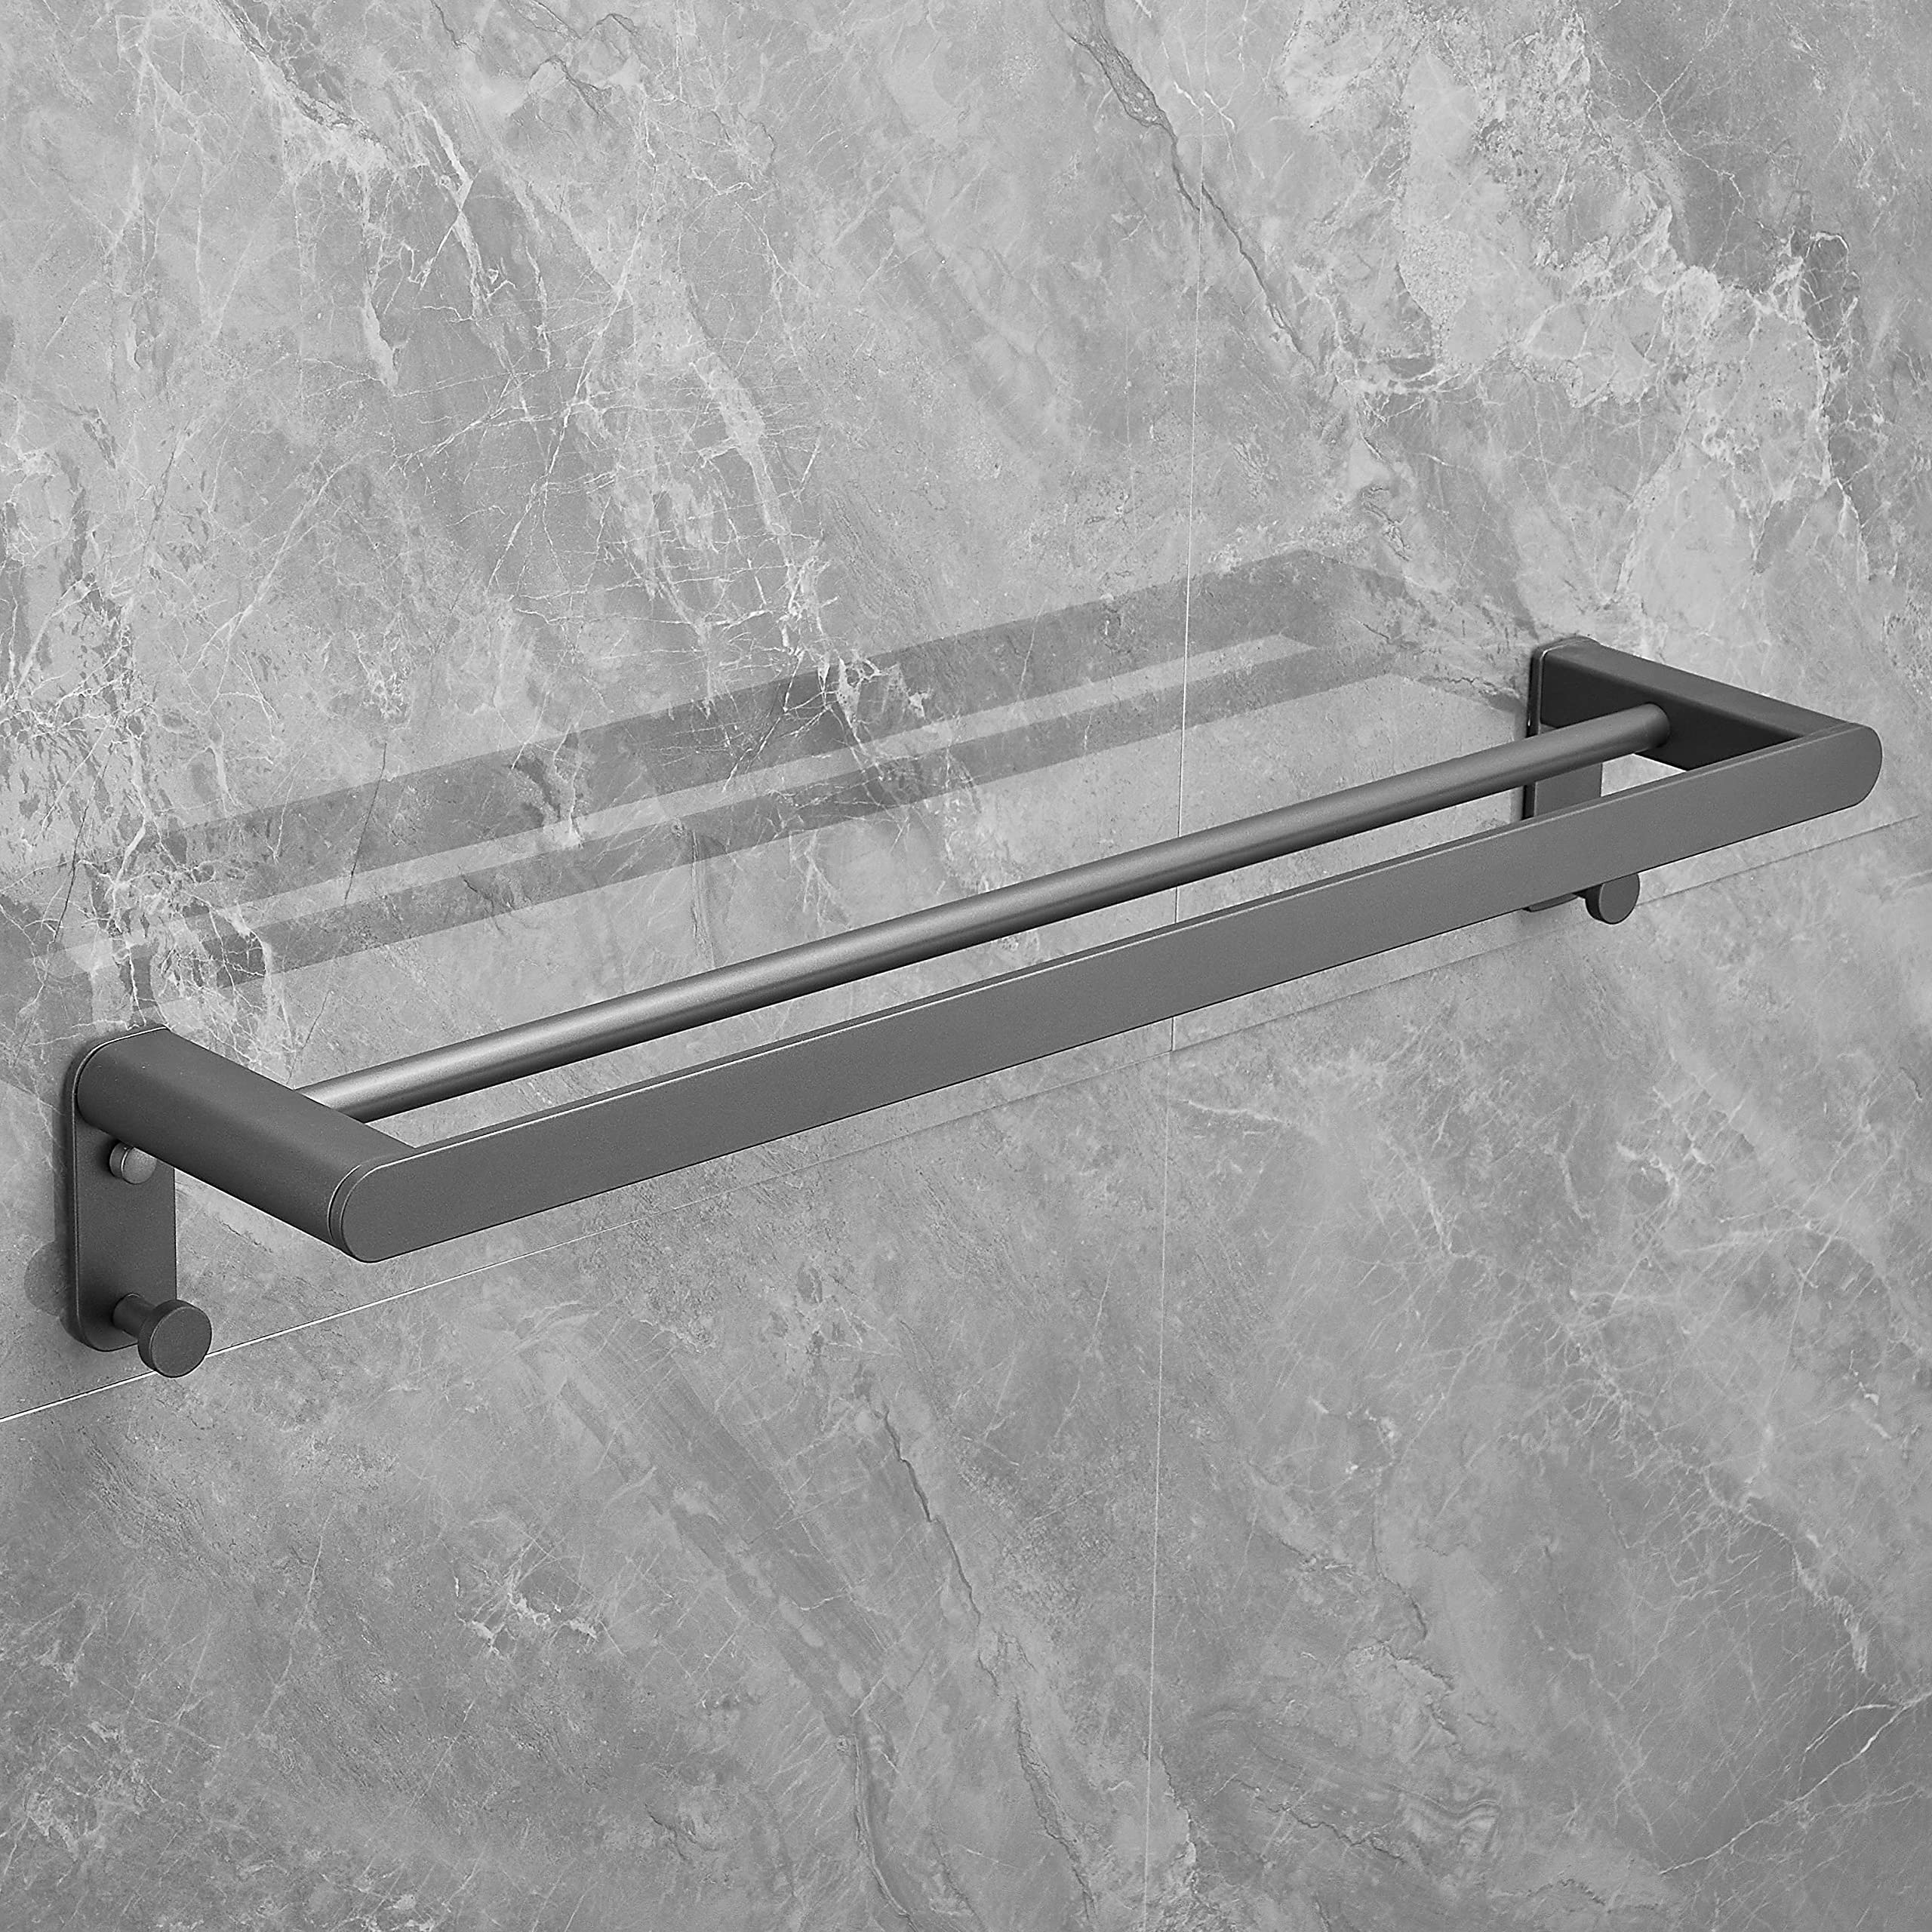 Plantex Space Aluminium Double Towel Rod/Towel Bar/Towel Hanger with Fix Hook for Bathroom/Kitchen/Loundry Room/Bathroom Accessories (966, Grey) – Pack of 1